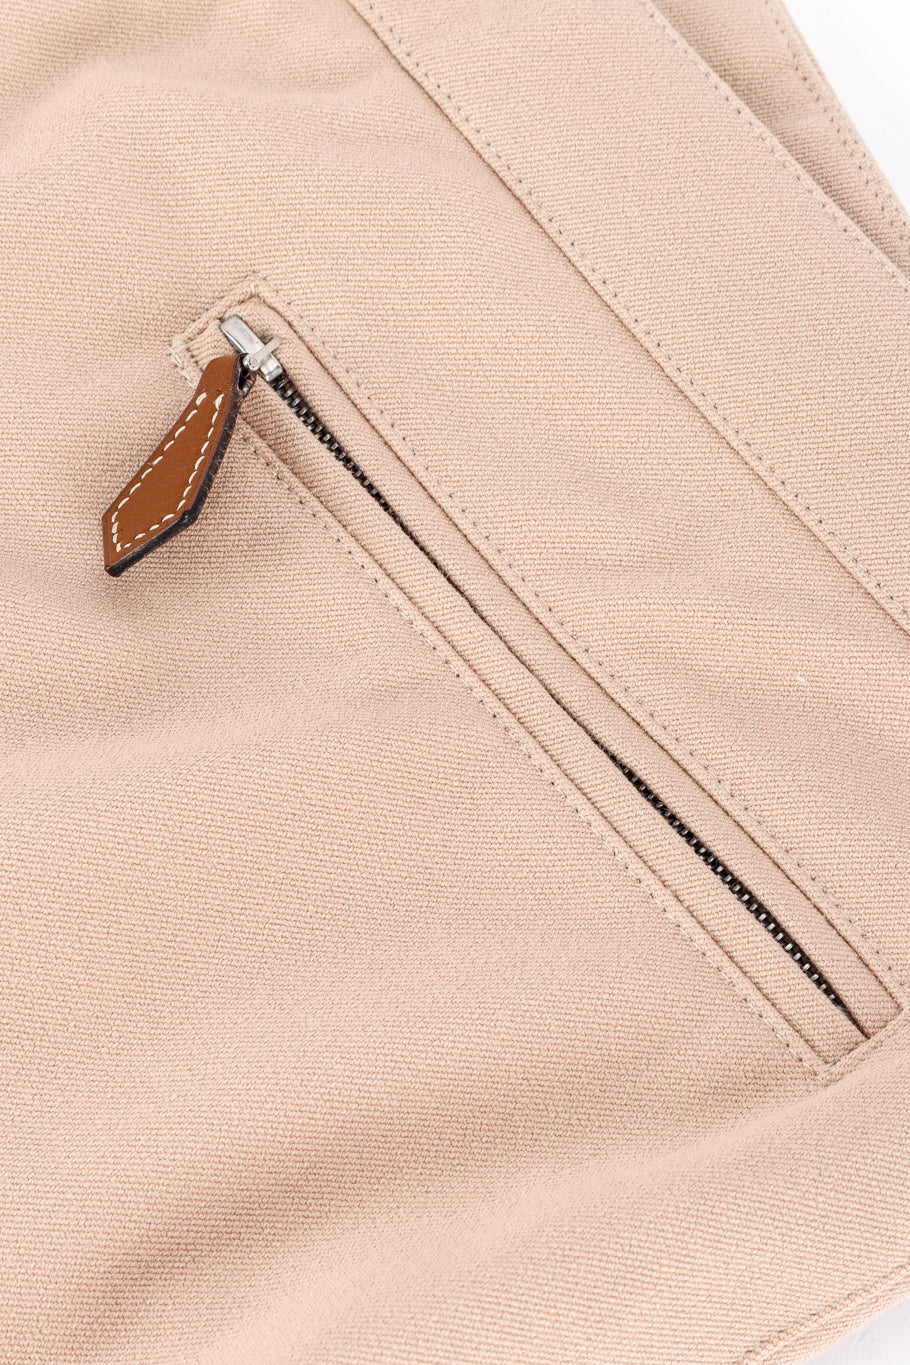 Vintage Hermés High Waist Cotton Pant welt pocket closeup @recess la